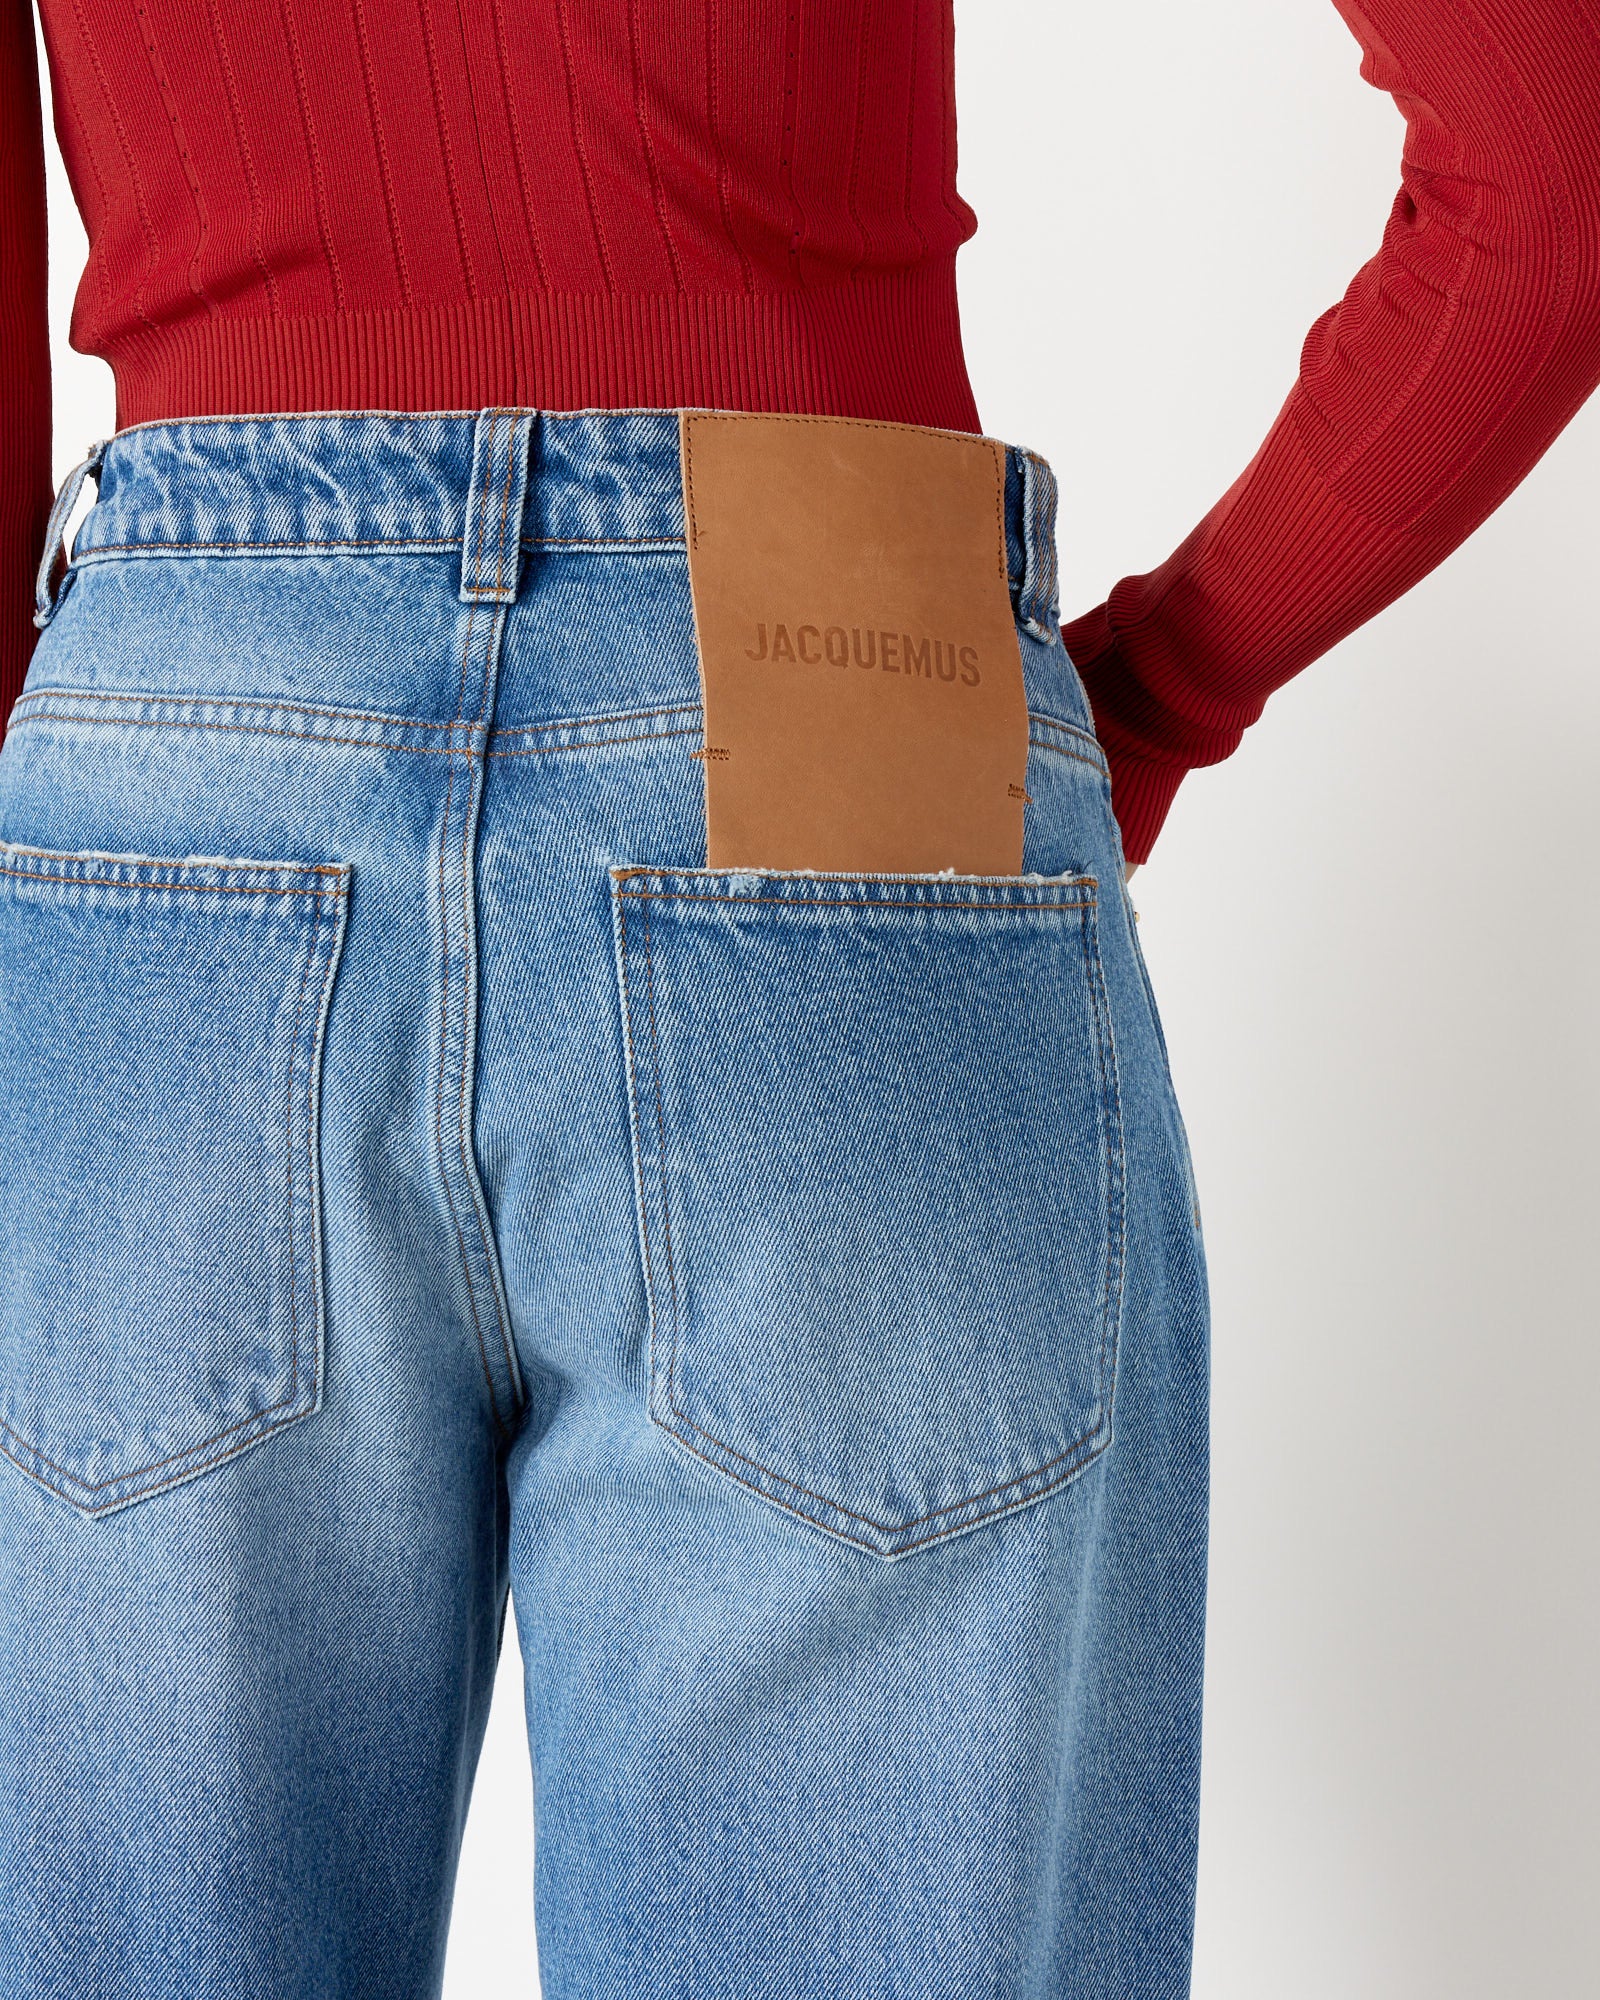 Le De-Nimes Large Jeans in Blue/Tabac